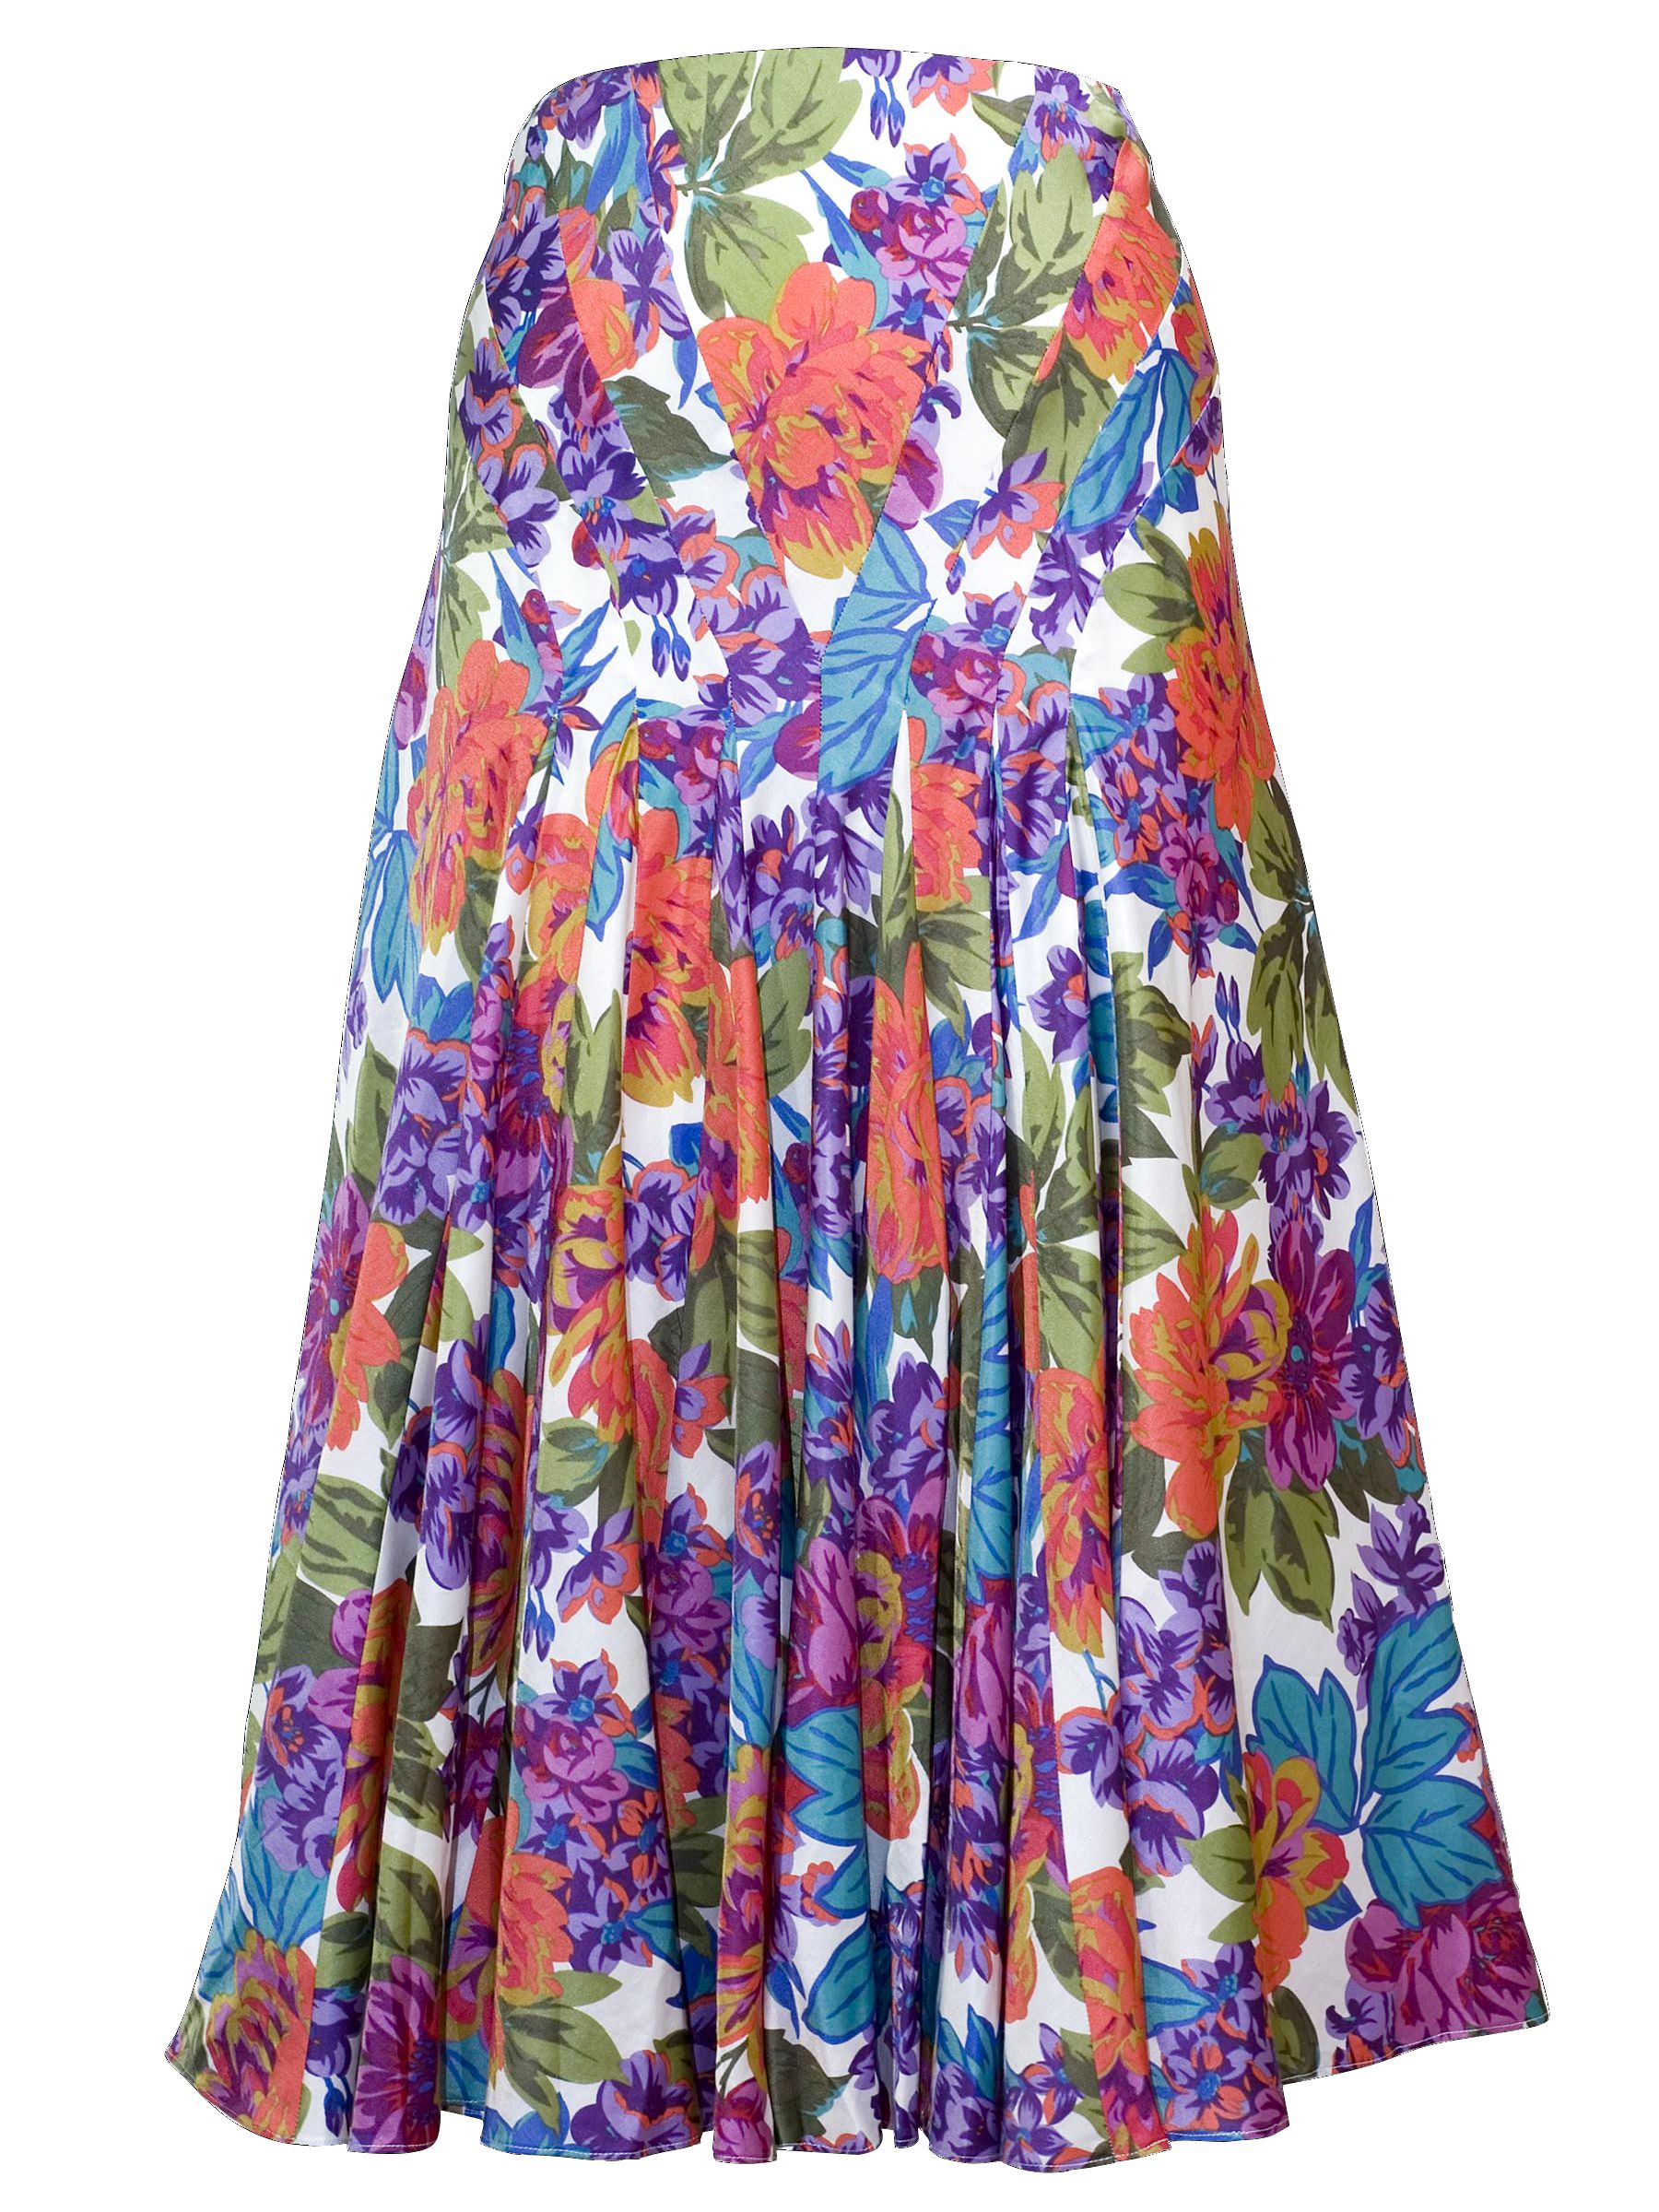 Chesca Dahlia Print Multi Panel Skirt, Multicoloured at JohnLewis